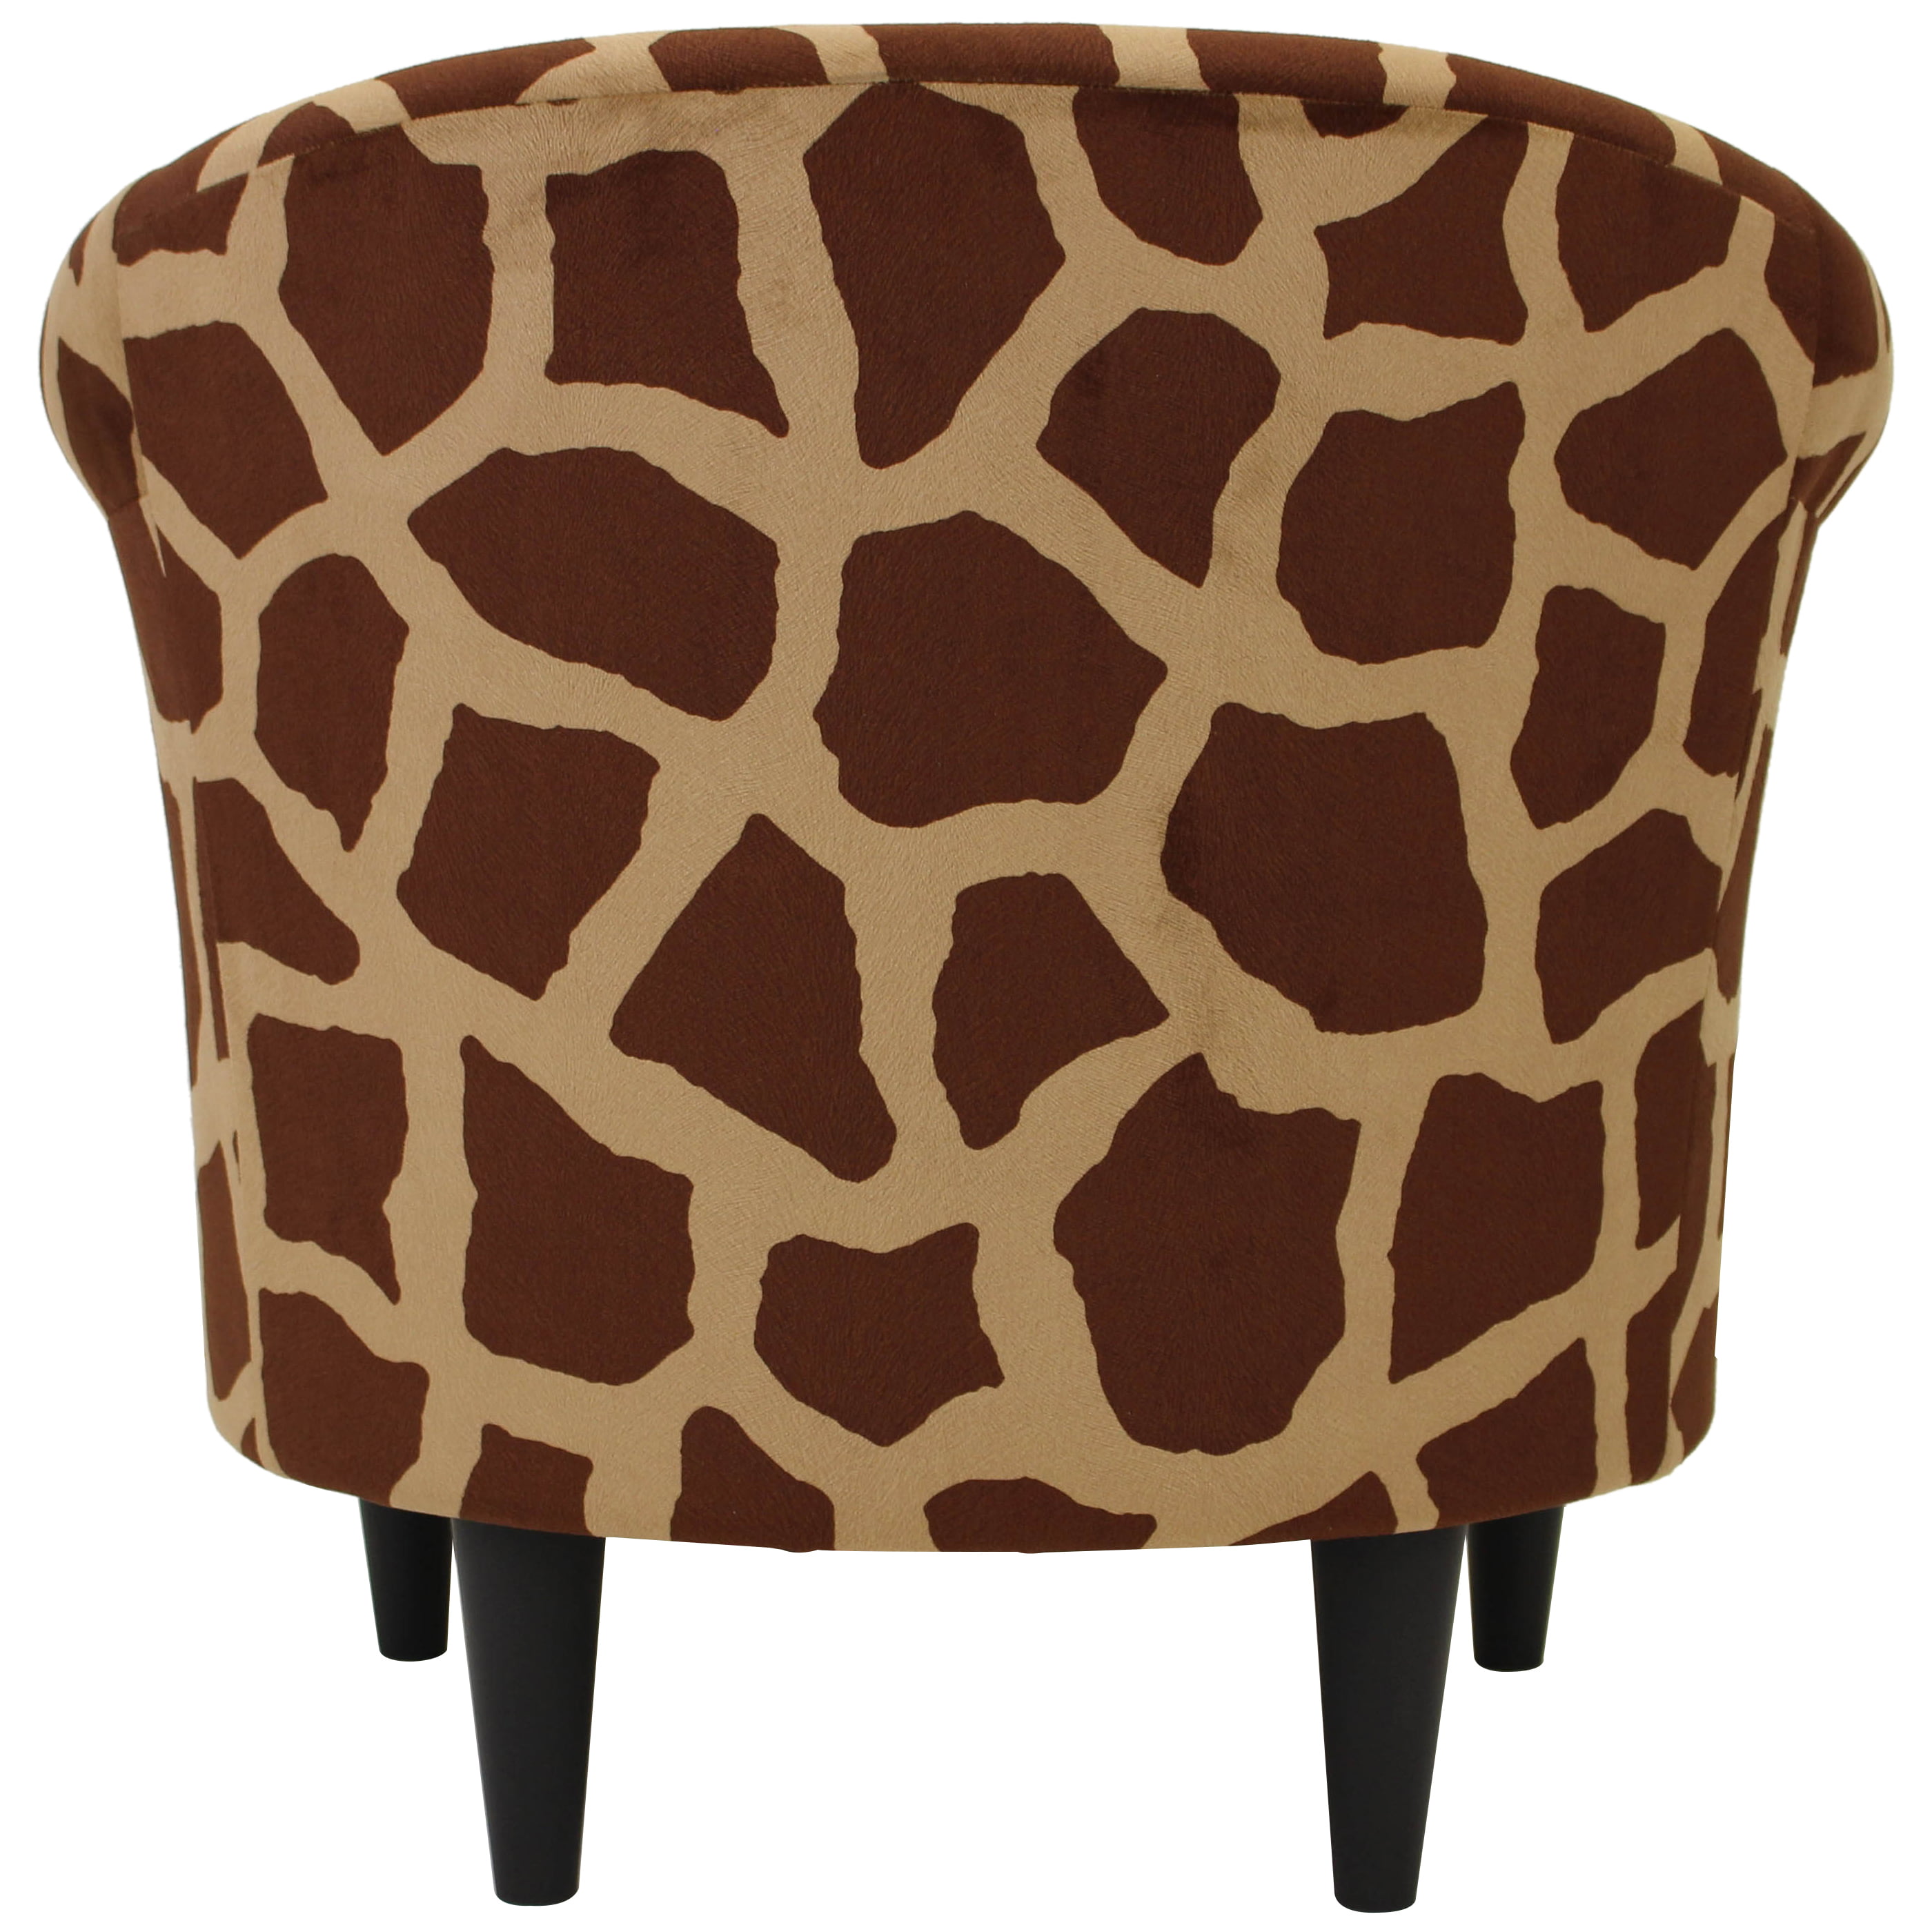 Cow Hide Furniture Barrel Design Chair Cowhide Animal